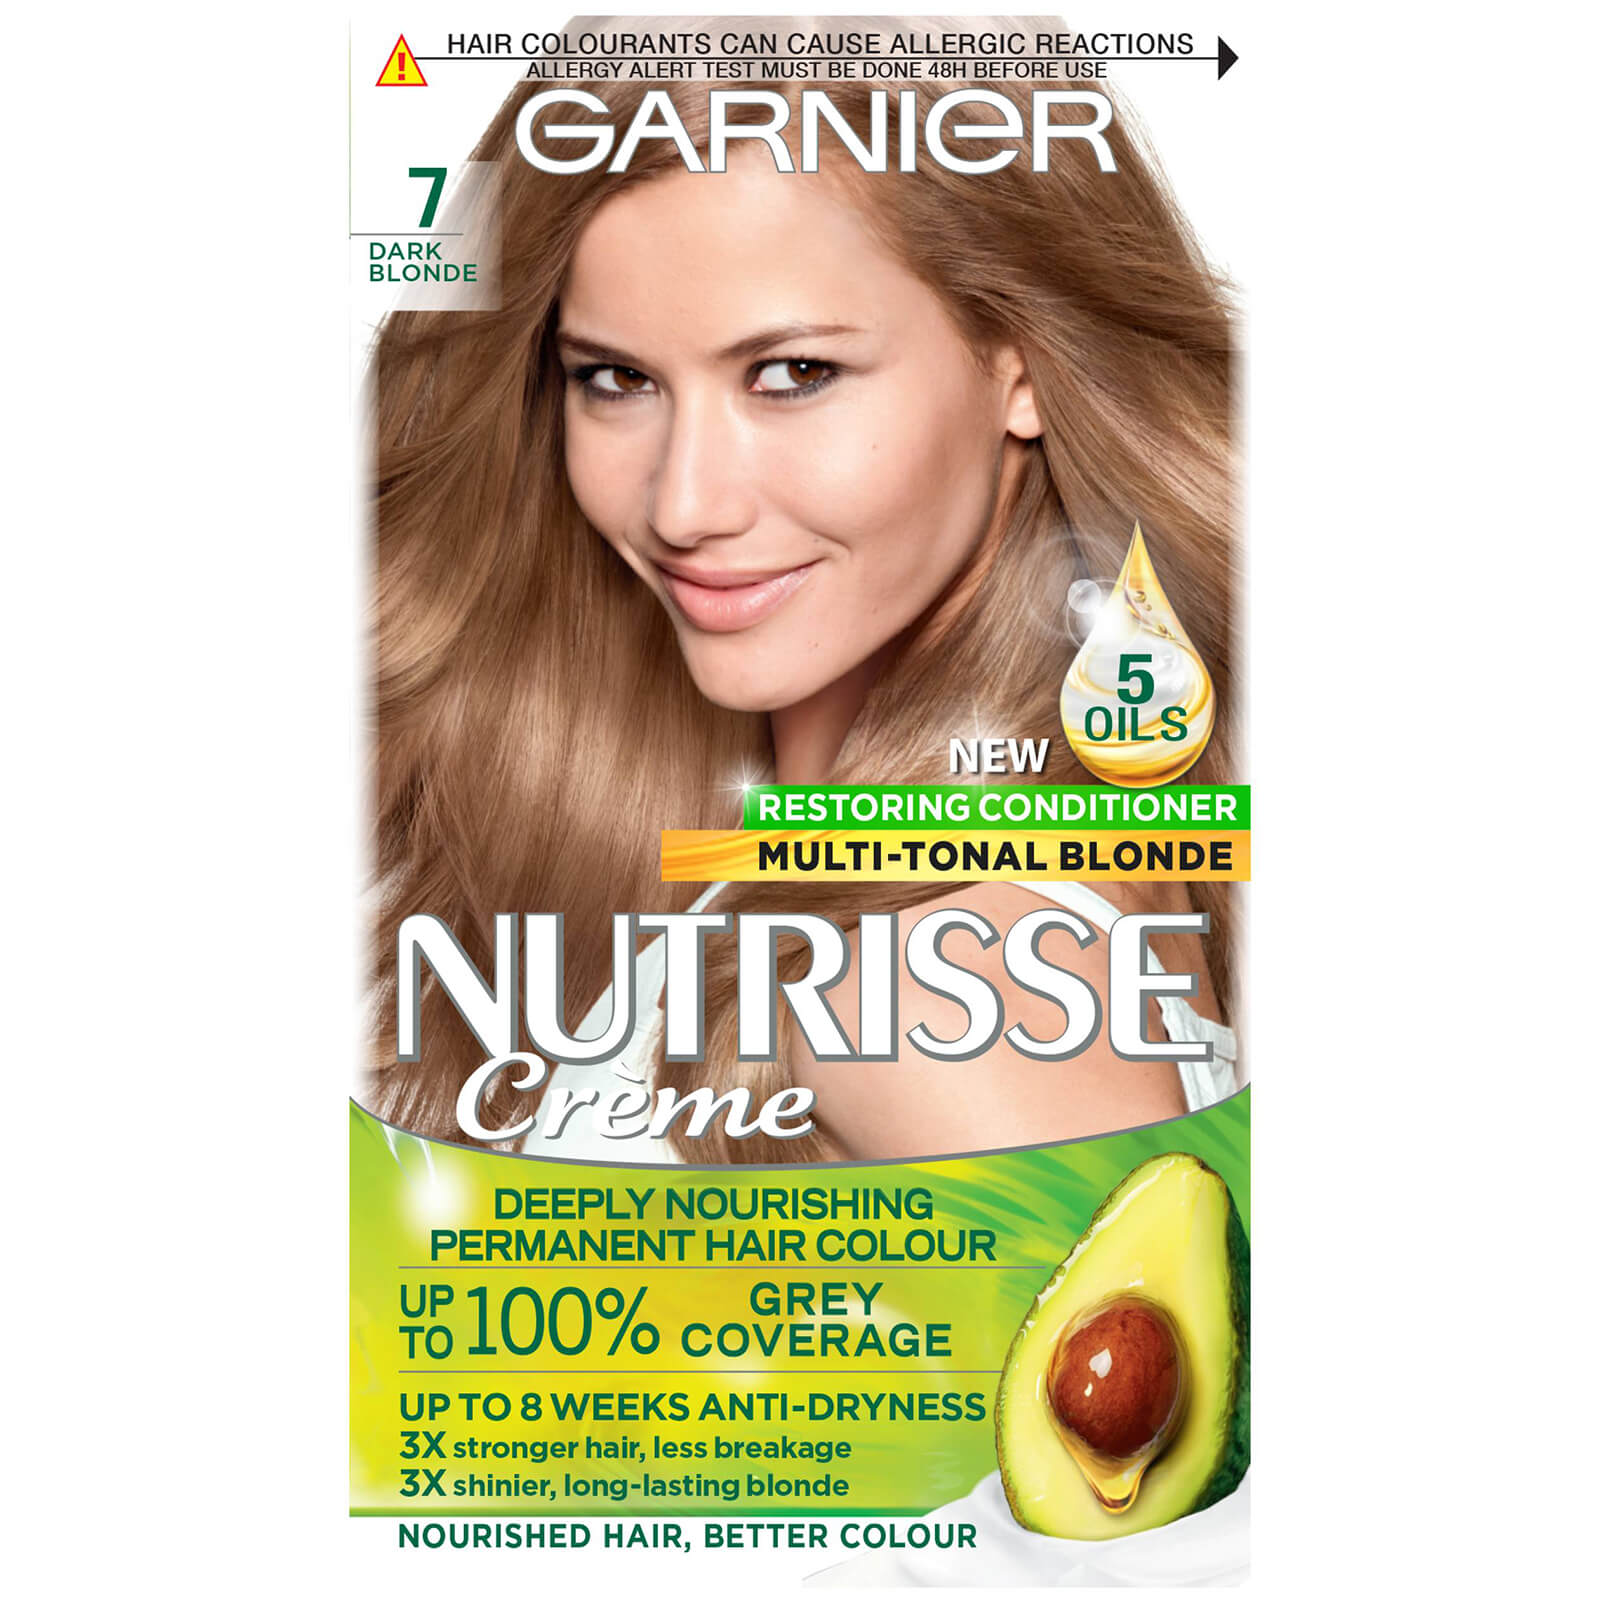 Garnier Nutrisse Permanent Hair Dye (Various Shades) - 7 Dark Blonde